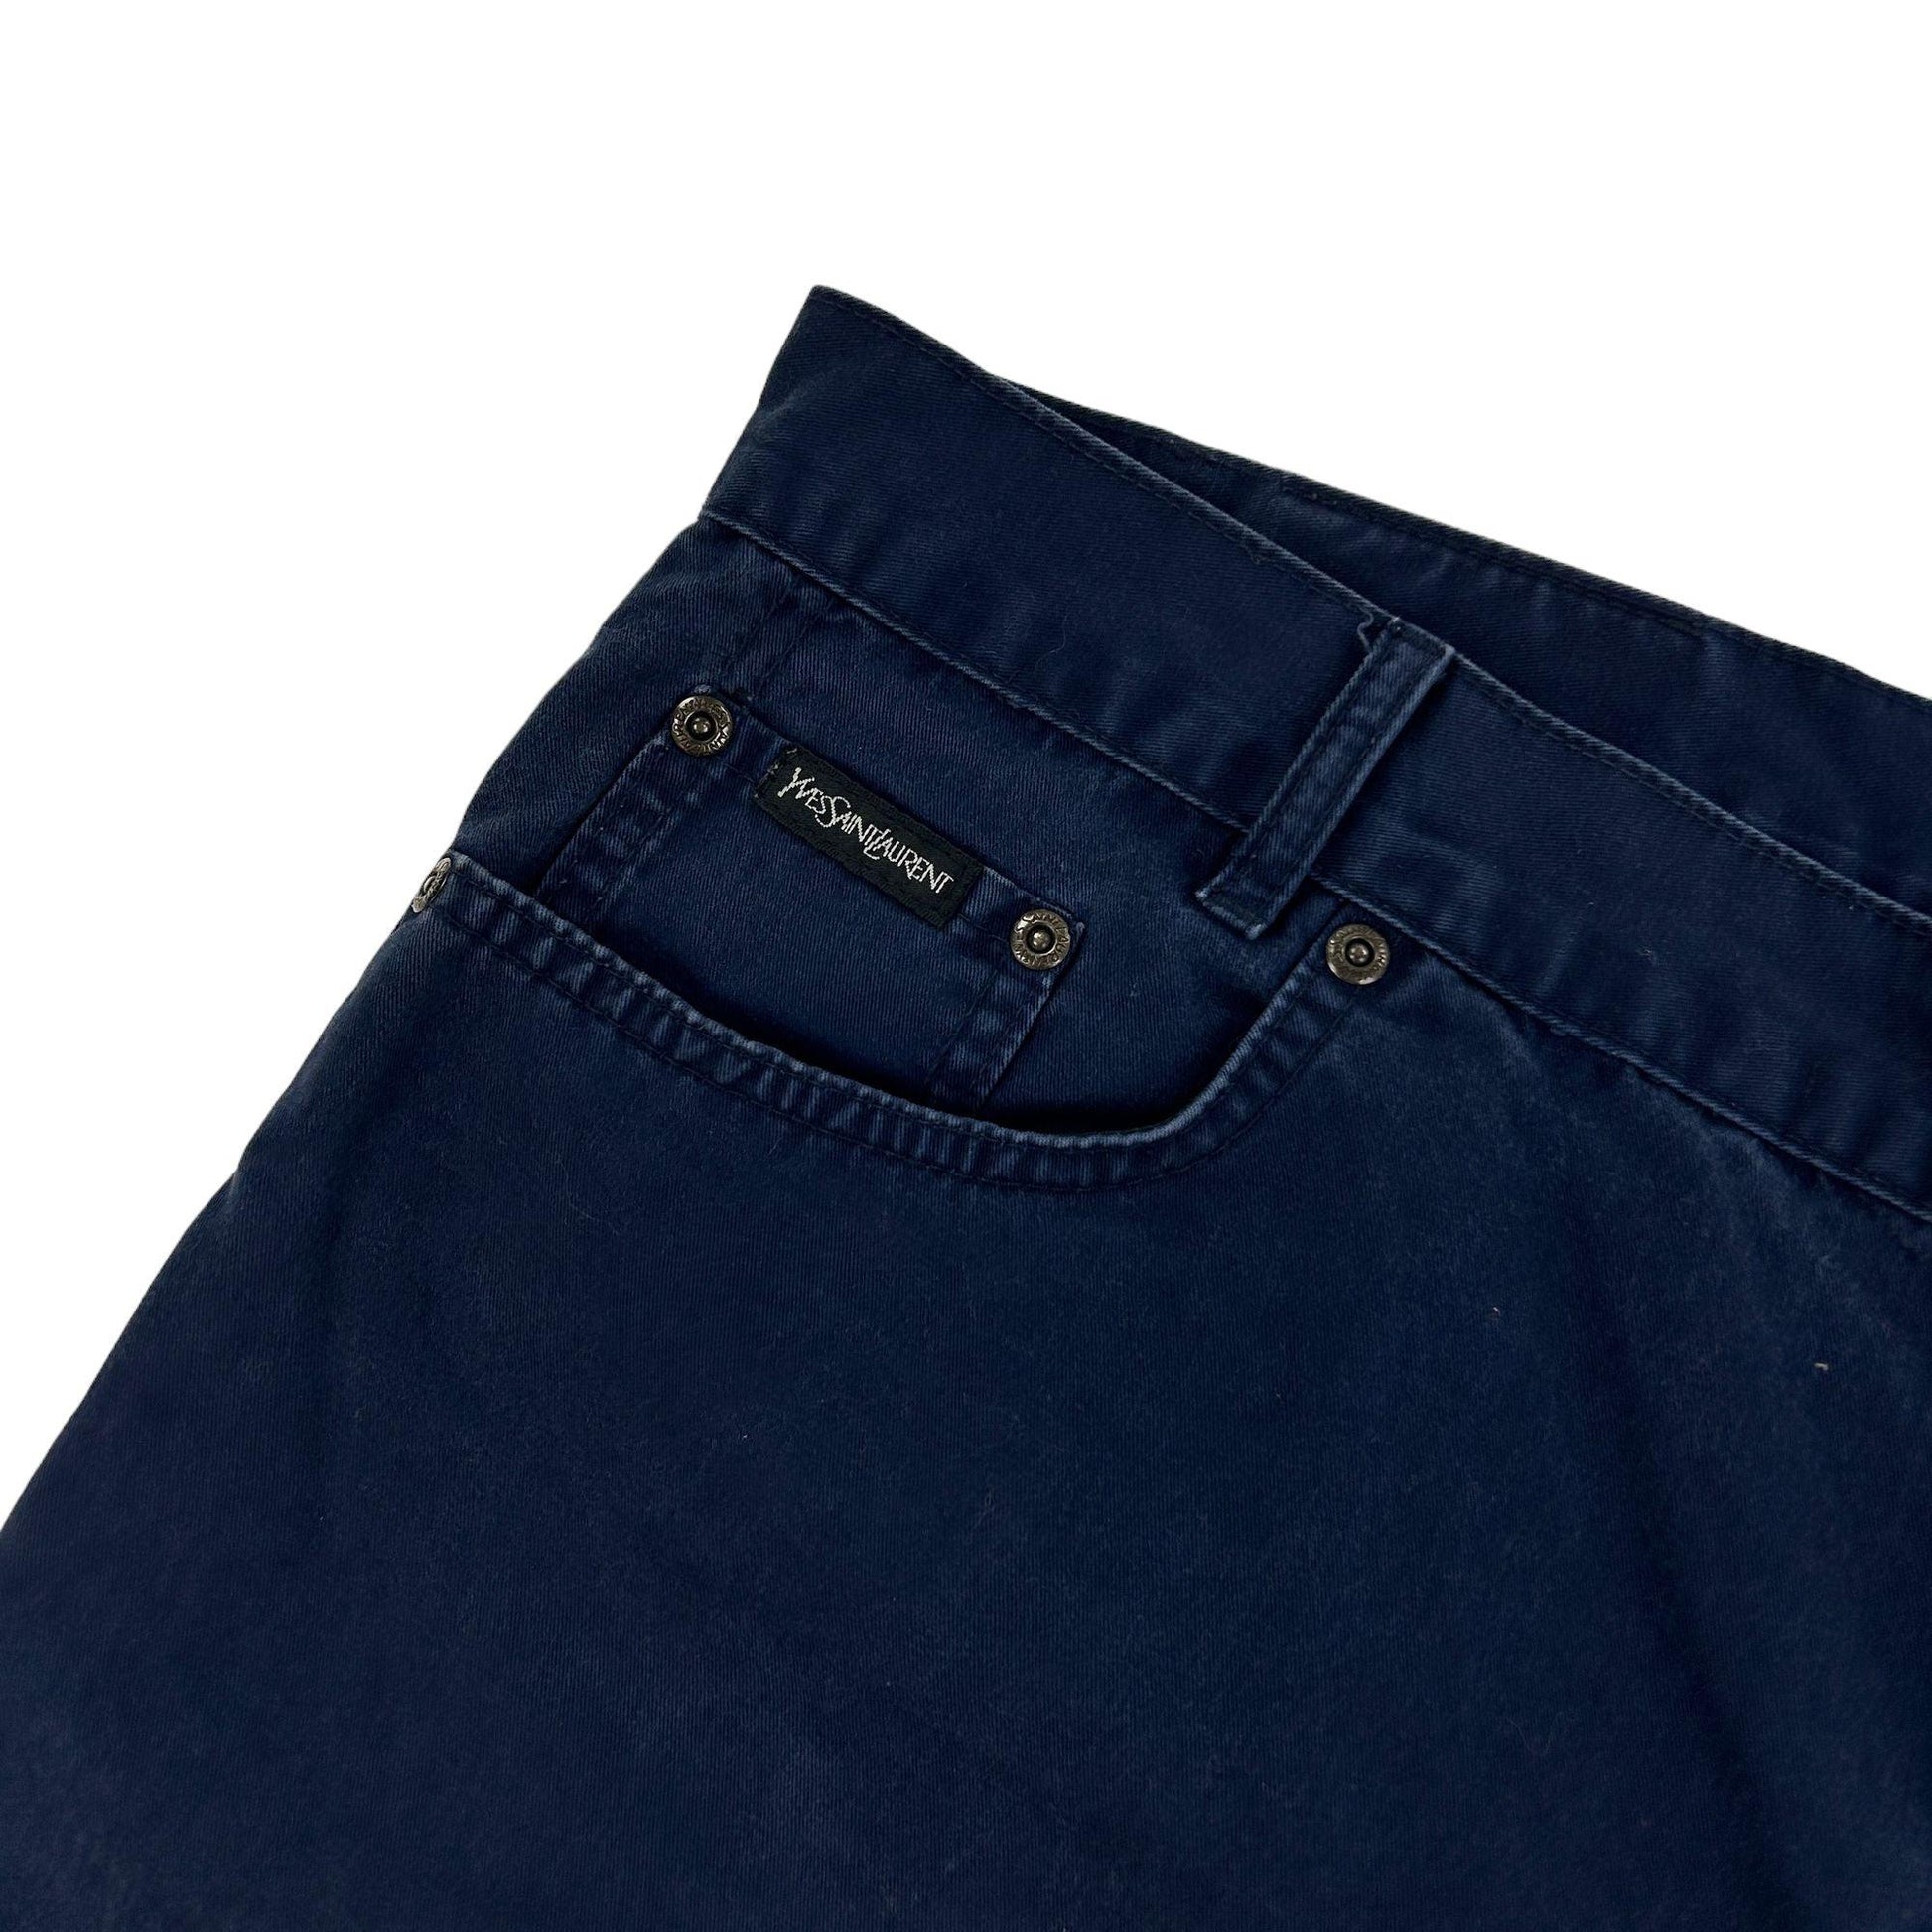 Vintage Yves Saint Laurent Trousers Size W37 - Known Source